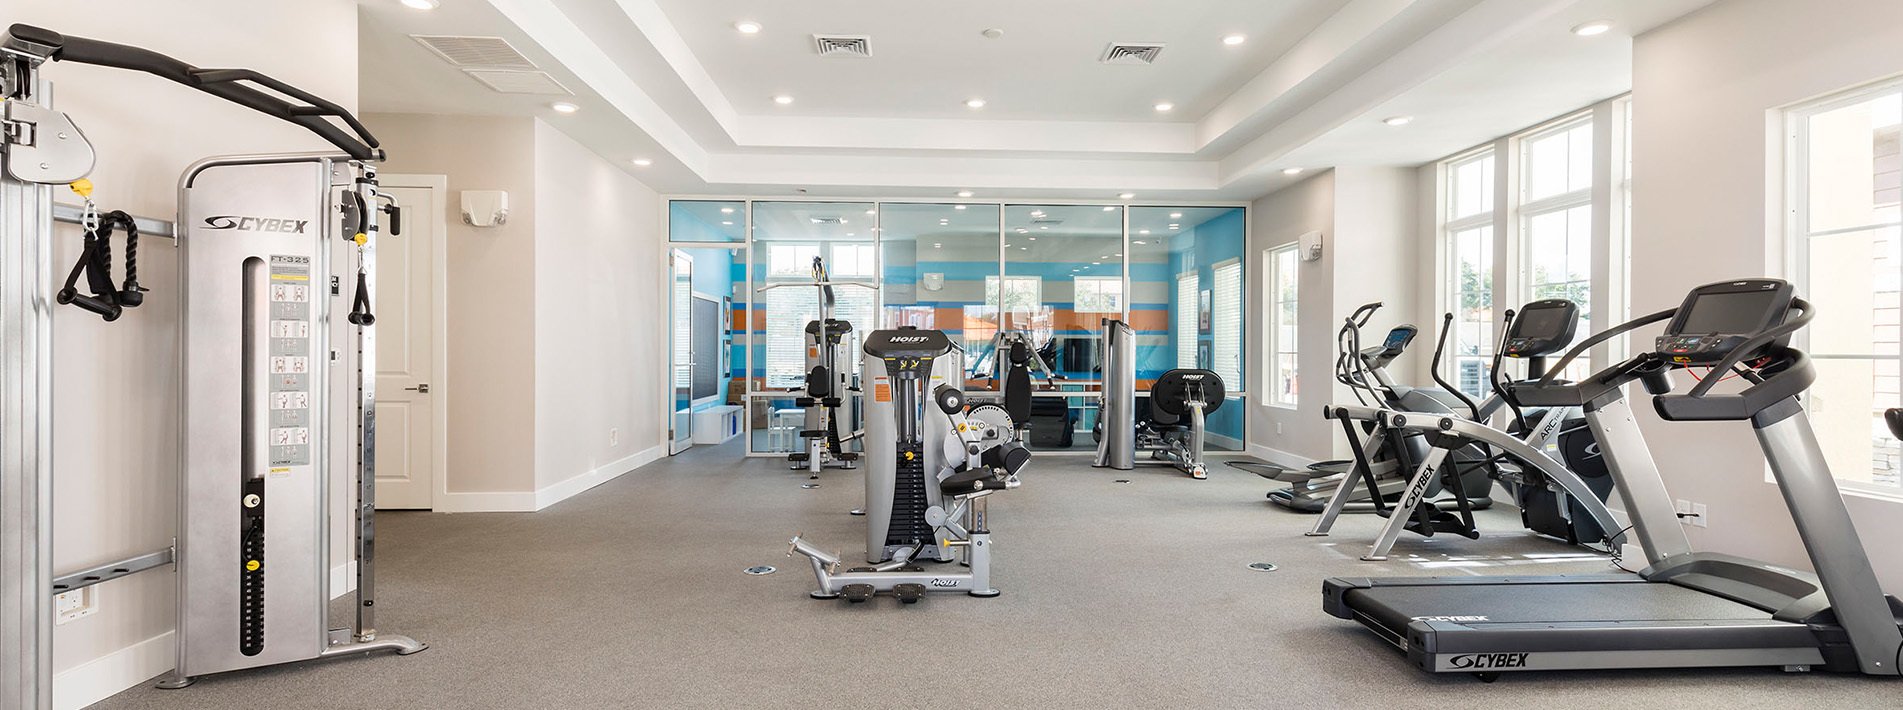 Summerville Resort Orlando Investment Property Fitness Center